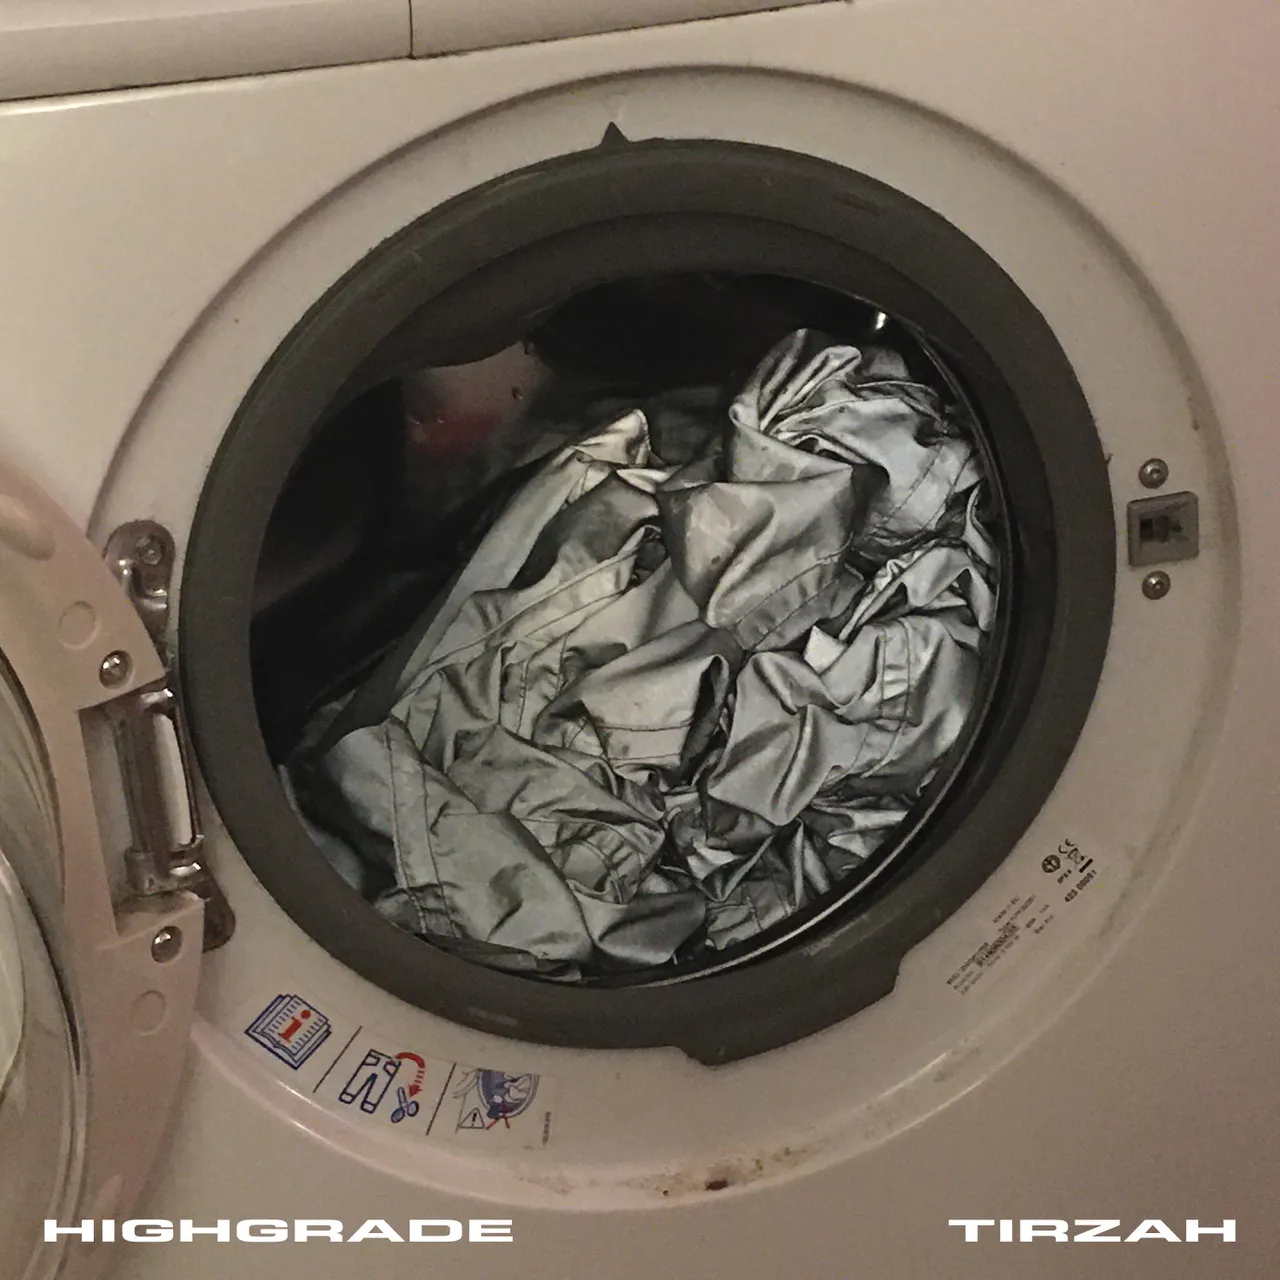 Tirzah Highgrade